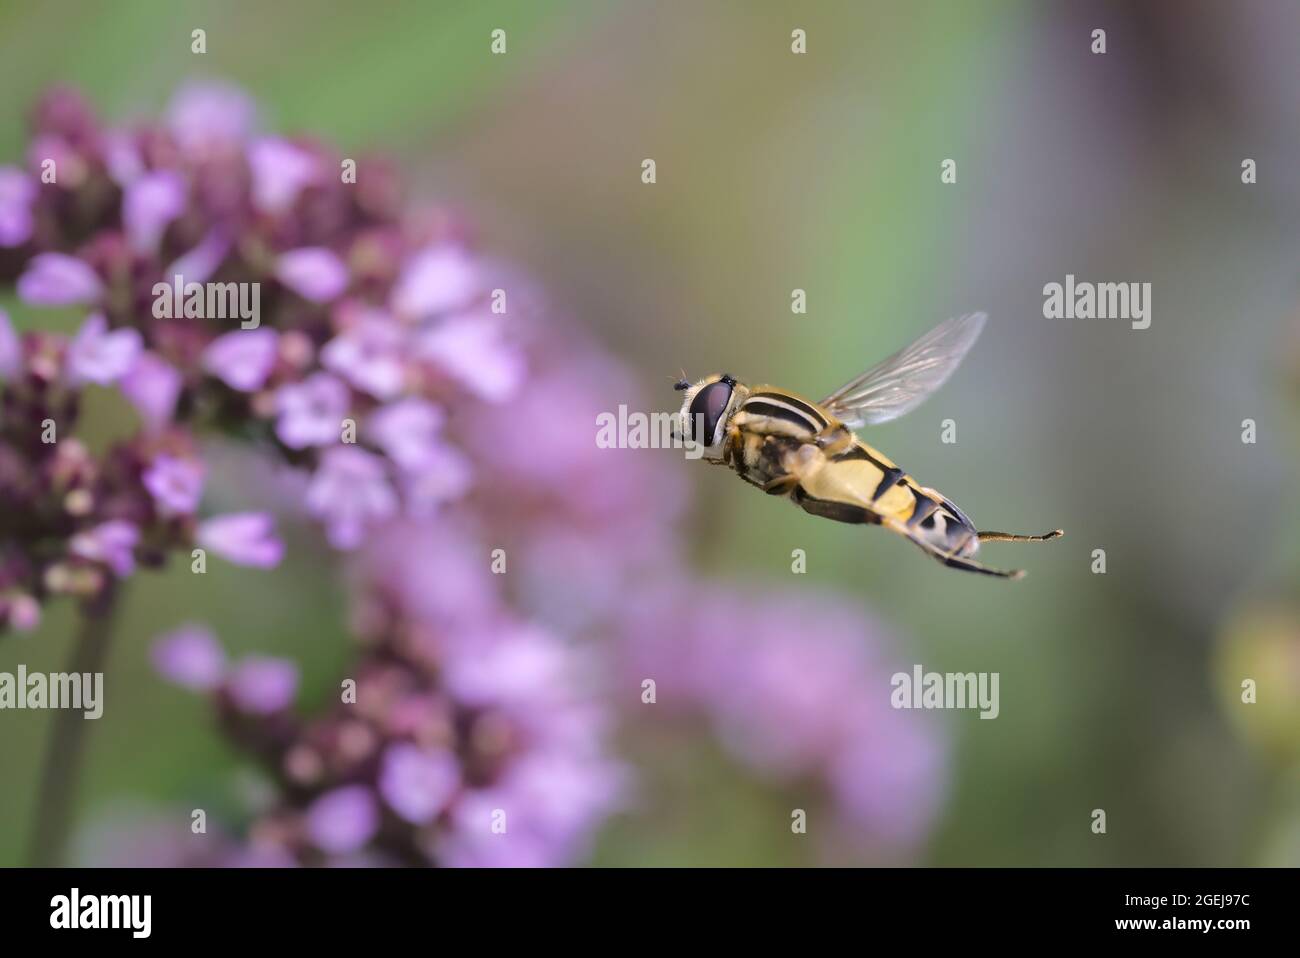 Große Tiger-Hoverfly im Flug (Helophilus trivittatus), große Sumpfschwebfliege im Flug, Insekten im Flug mit manuellem Fokus, Nahaufnahme/Makro Stockfoto